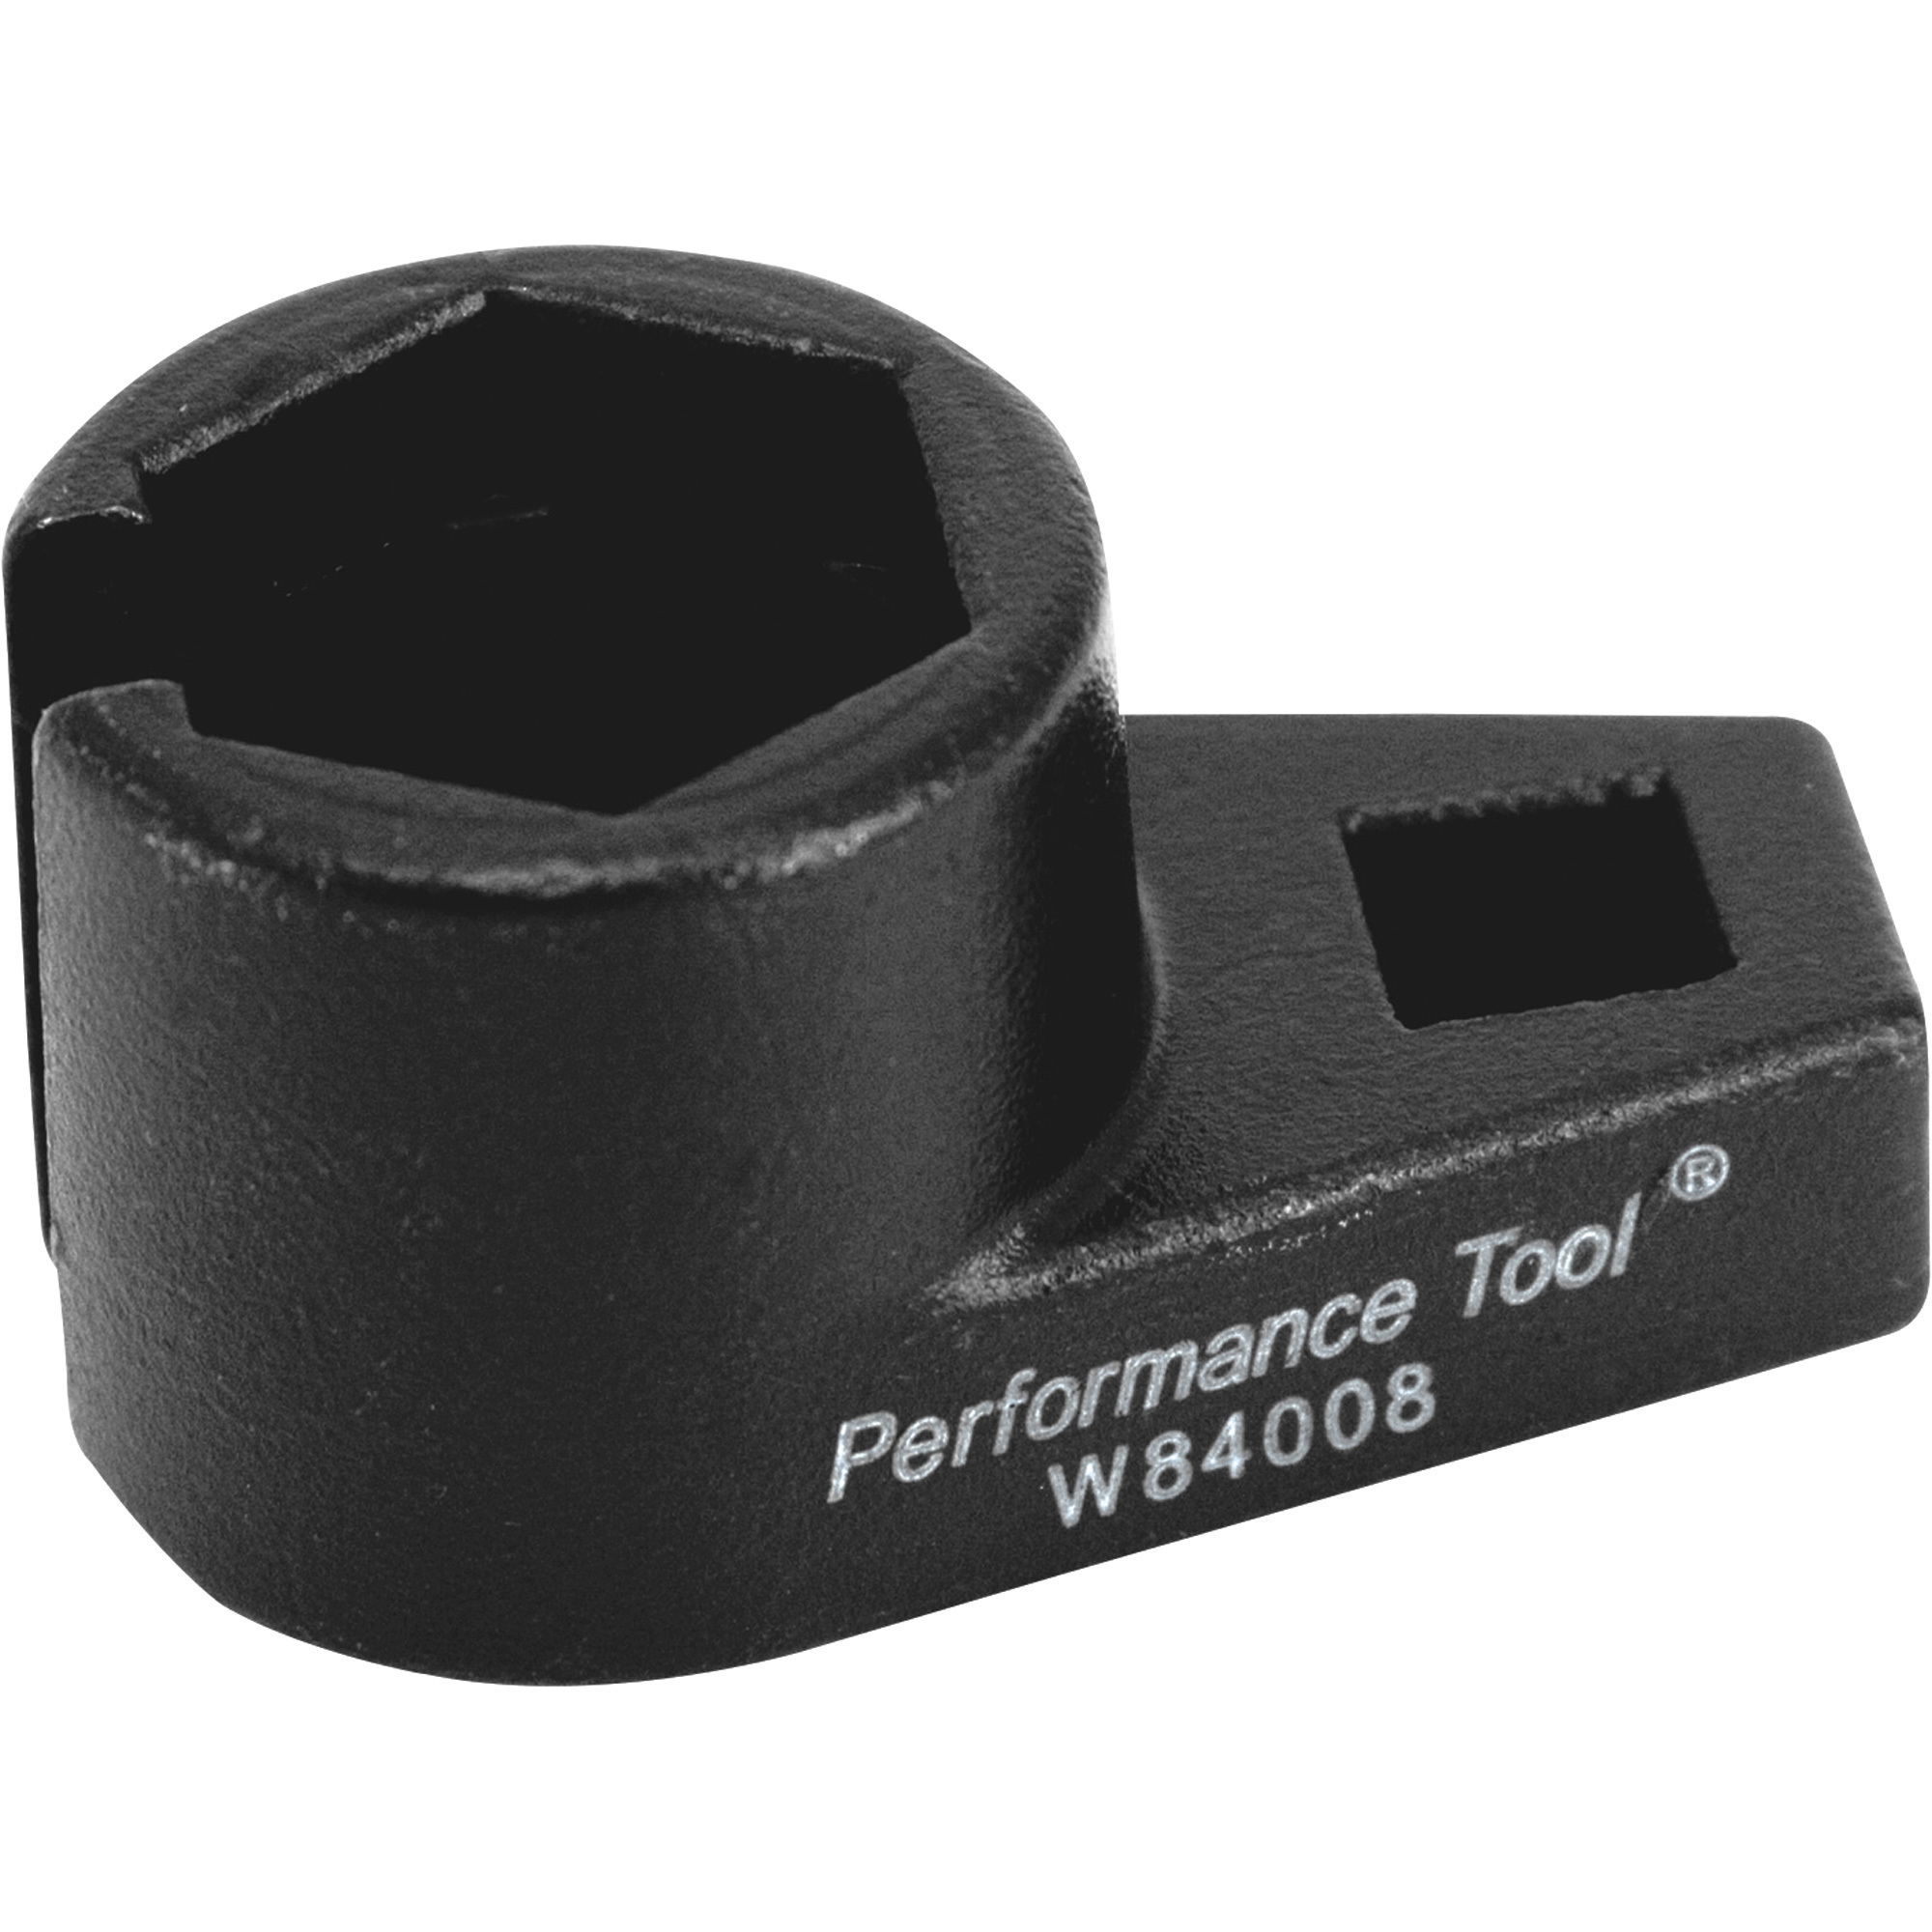 Performance Tool Offset Oxygen Sensor Wrench, Model W84008